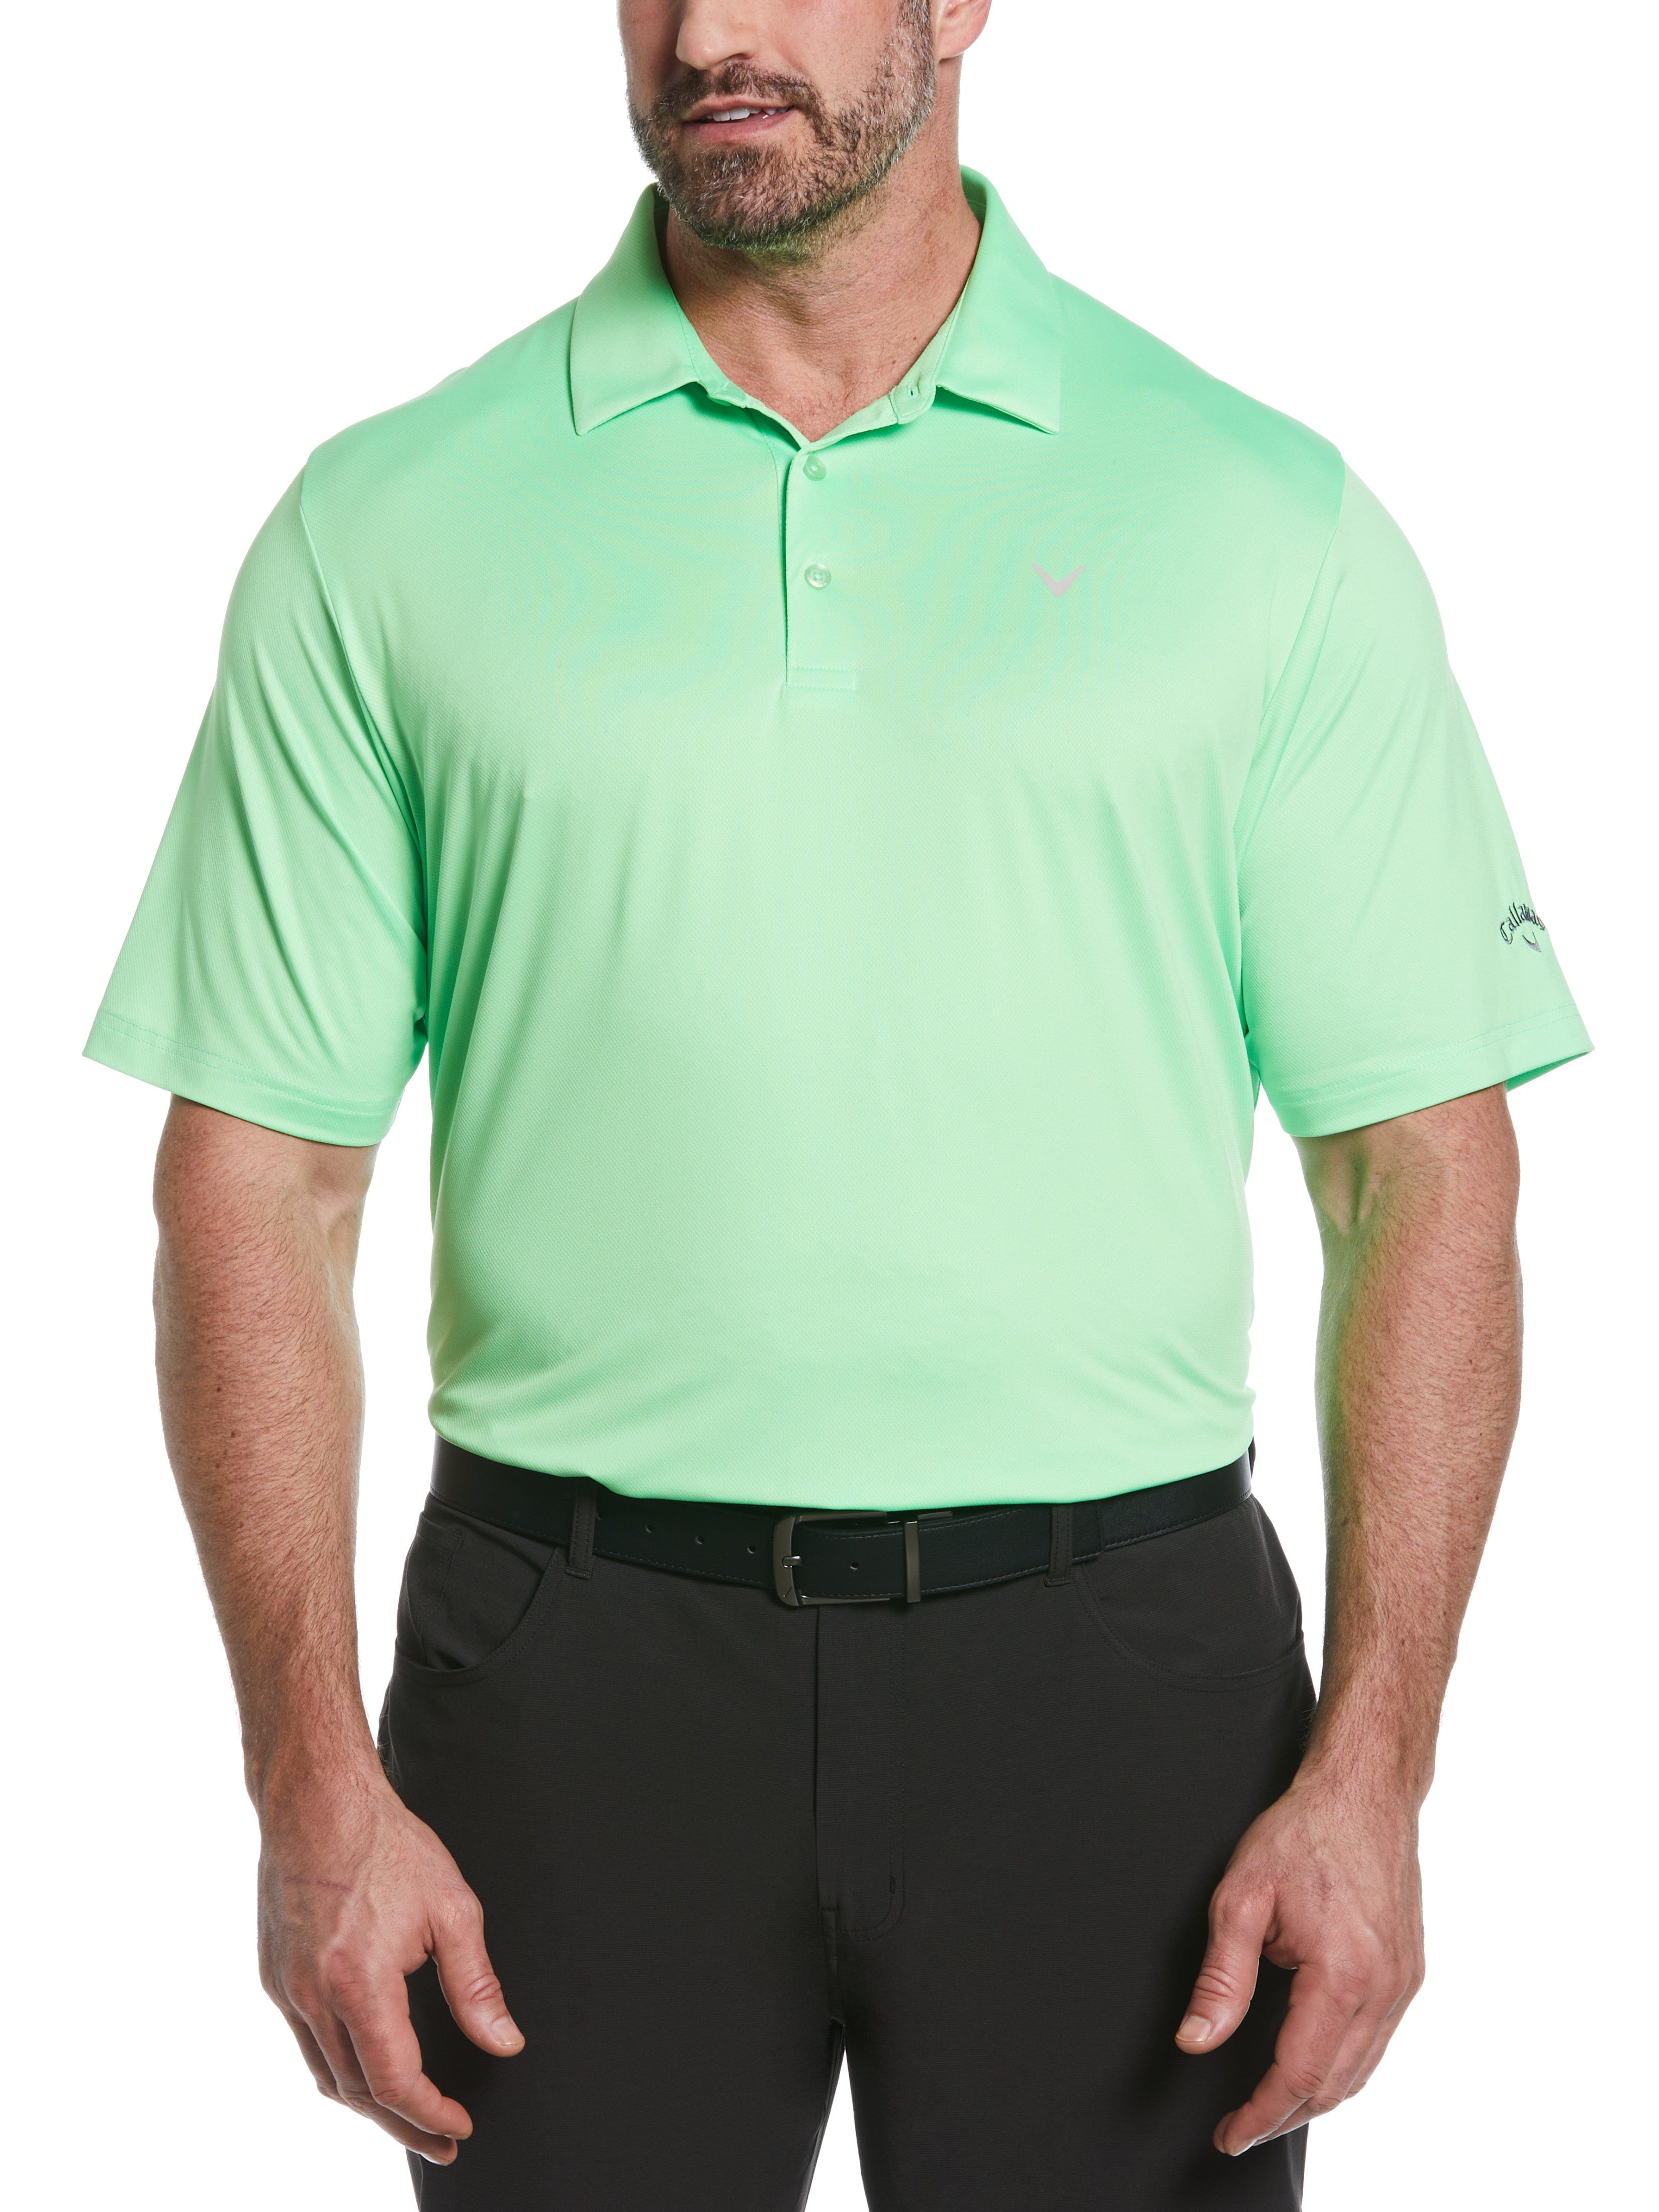 Callaway Apparel Mens Big & Tall Solid Swing Tech Golf Polo Shirt, Size LT, Summer Green, Polyester/Elastane | Golf Apparel Shop